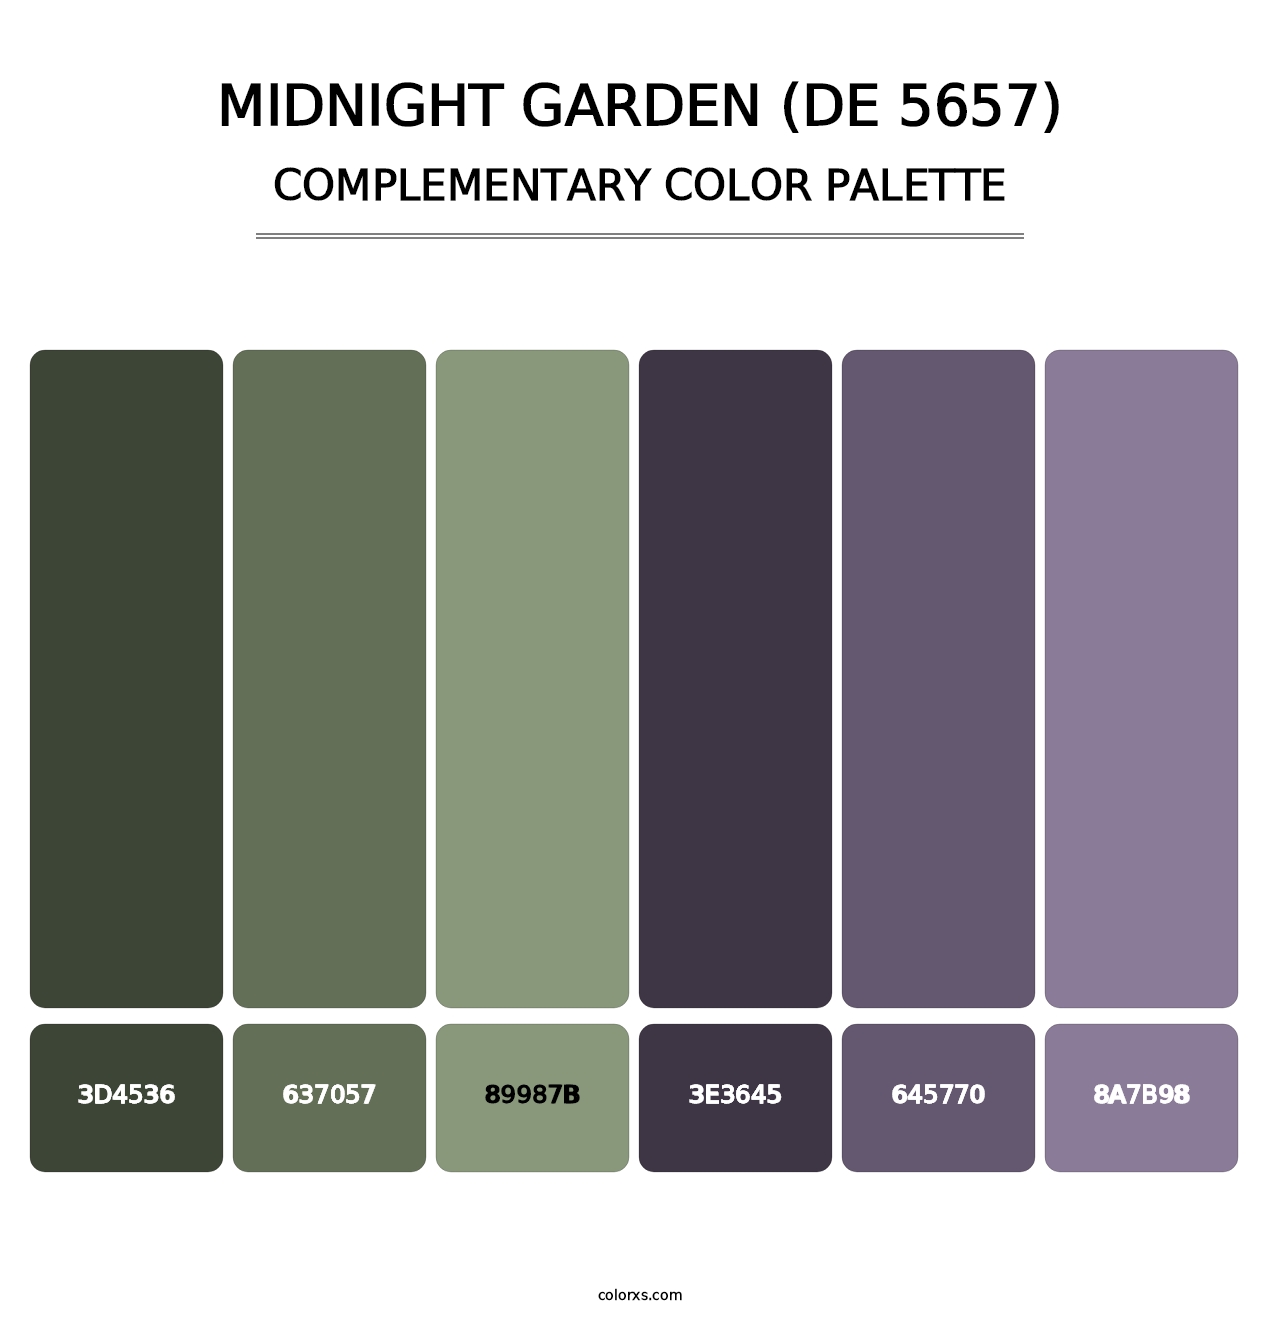 Midnight Garden (DE 5657) - Complementary Color Palette